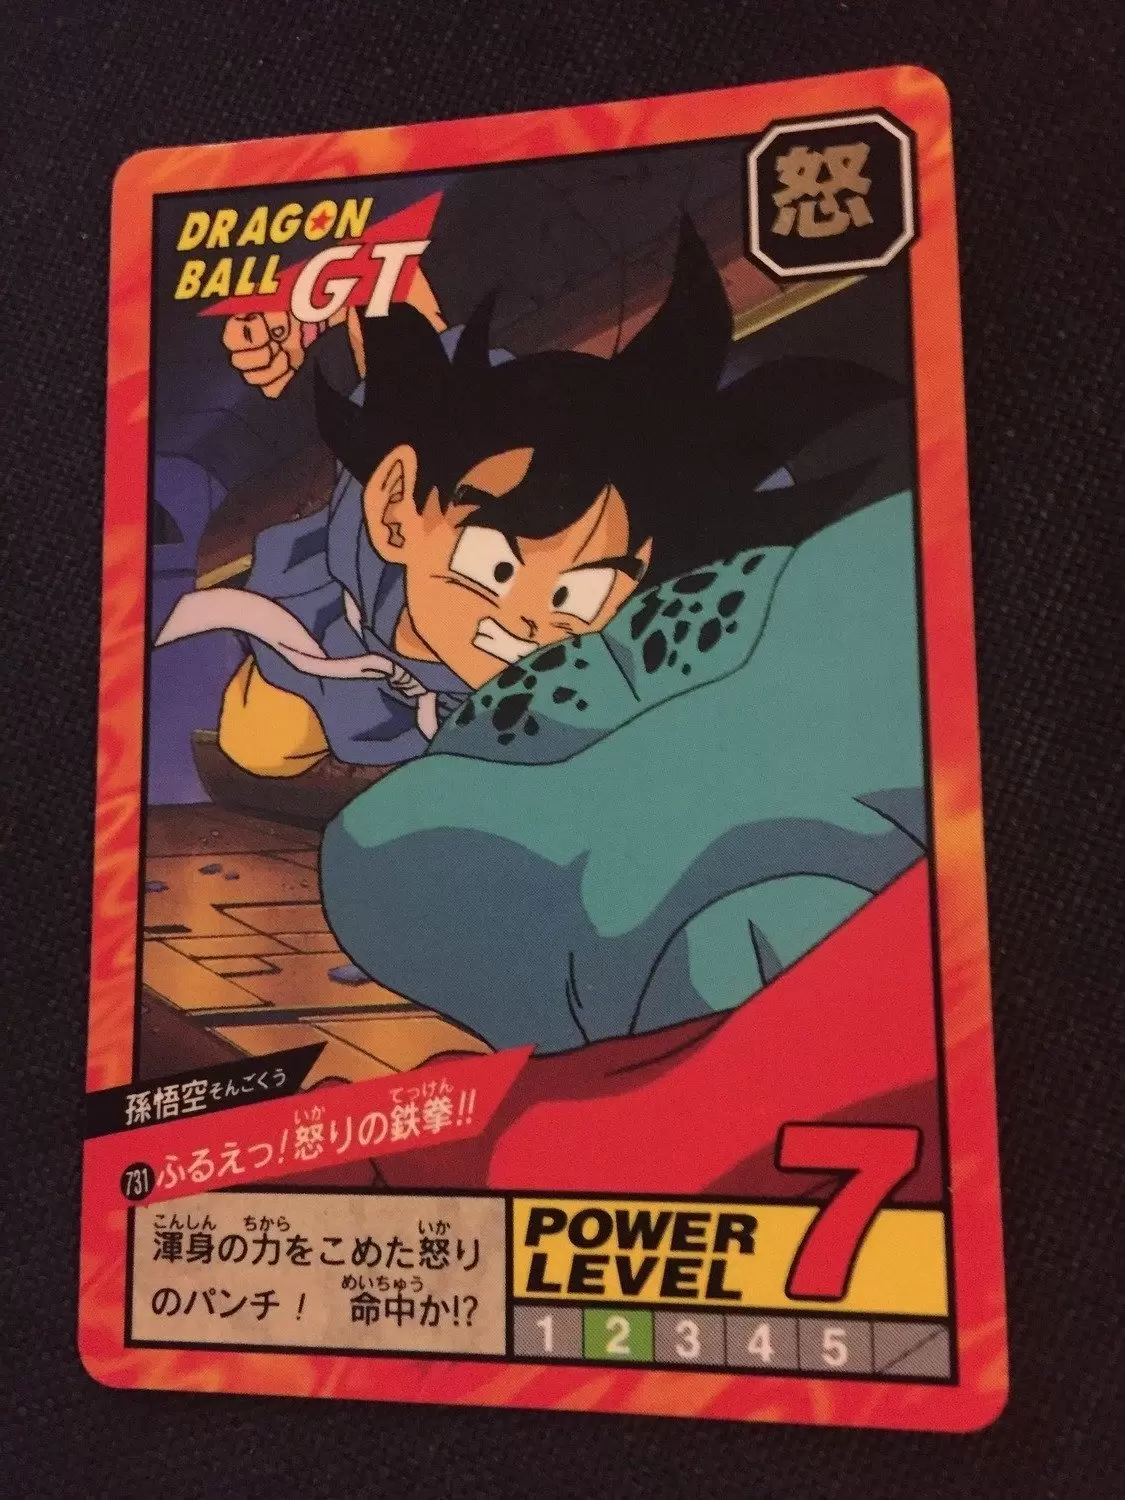 Power Level Part 17 - Dragon Ball Power Level Card #731